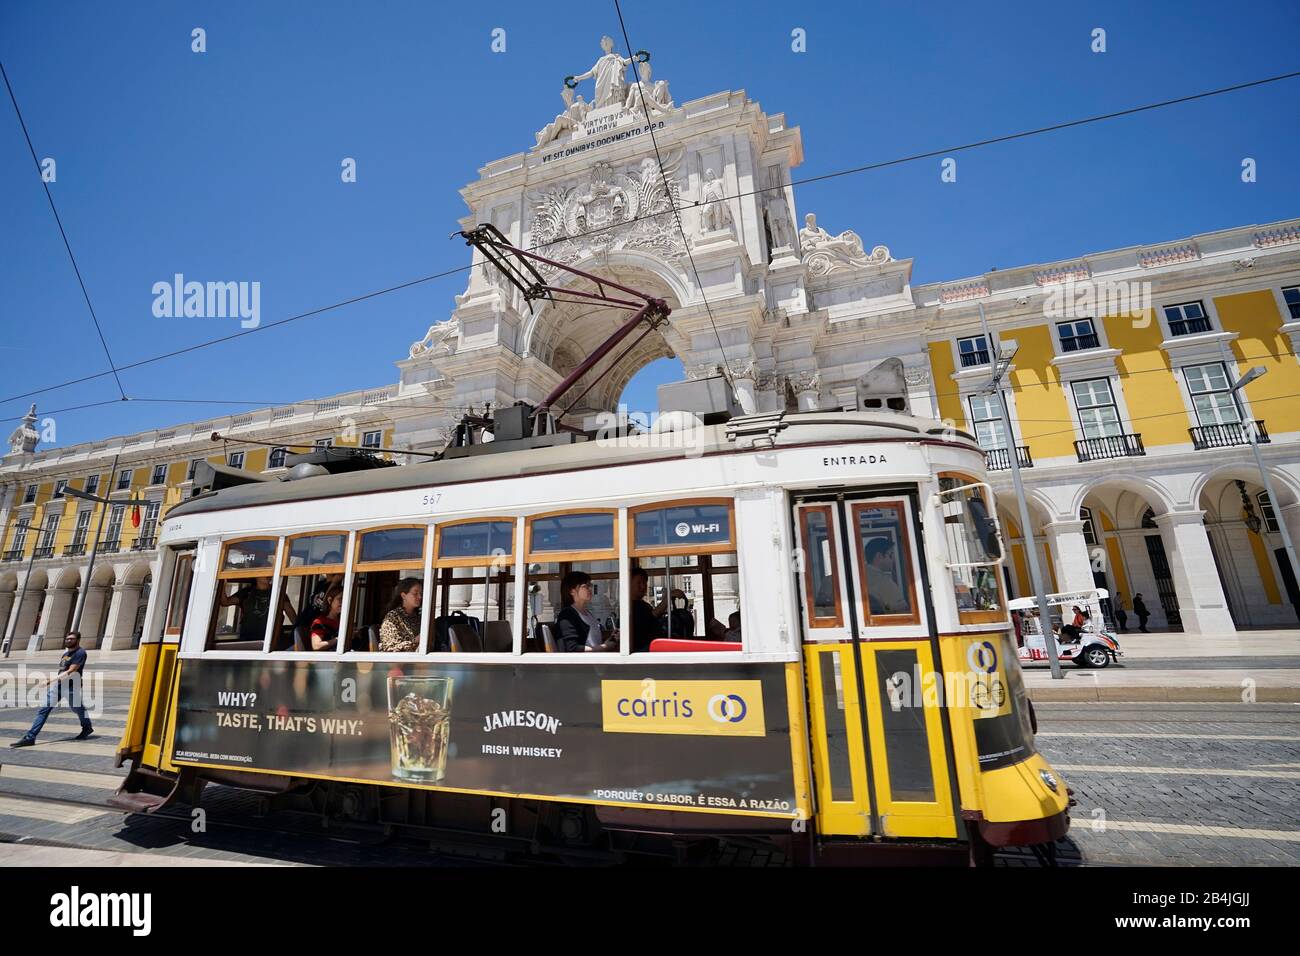 Europe, Portugal, Lisbon region, Lisbon, Baixa, Arc de Triomphe, Arco da Rua Augusta, Praca do Comercio, marketplace, tram Stock Photo